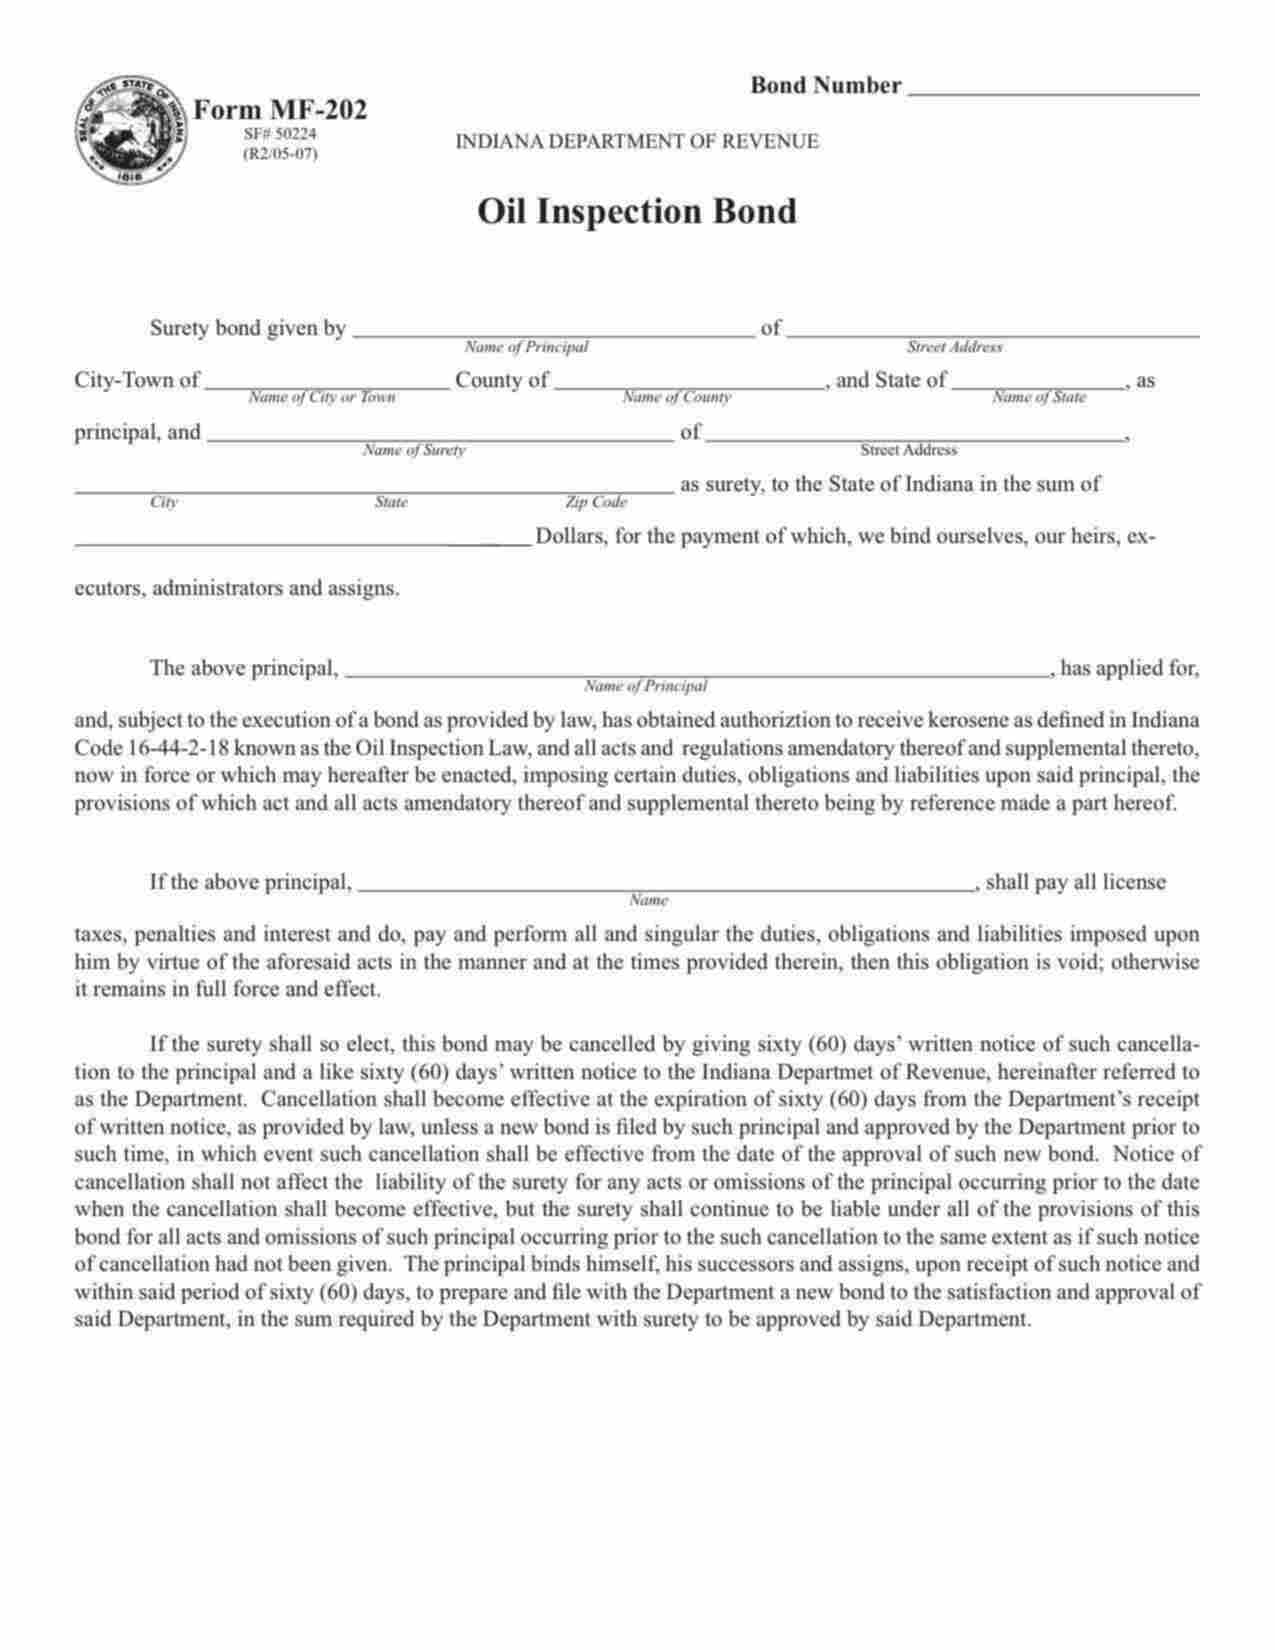 Indiana Oil Inspection Bond Form